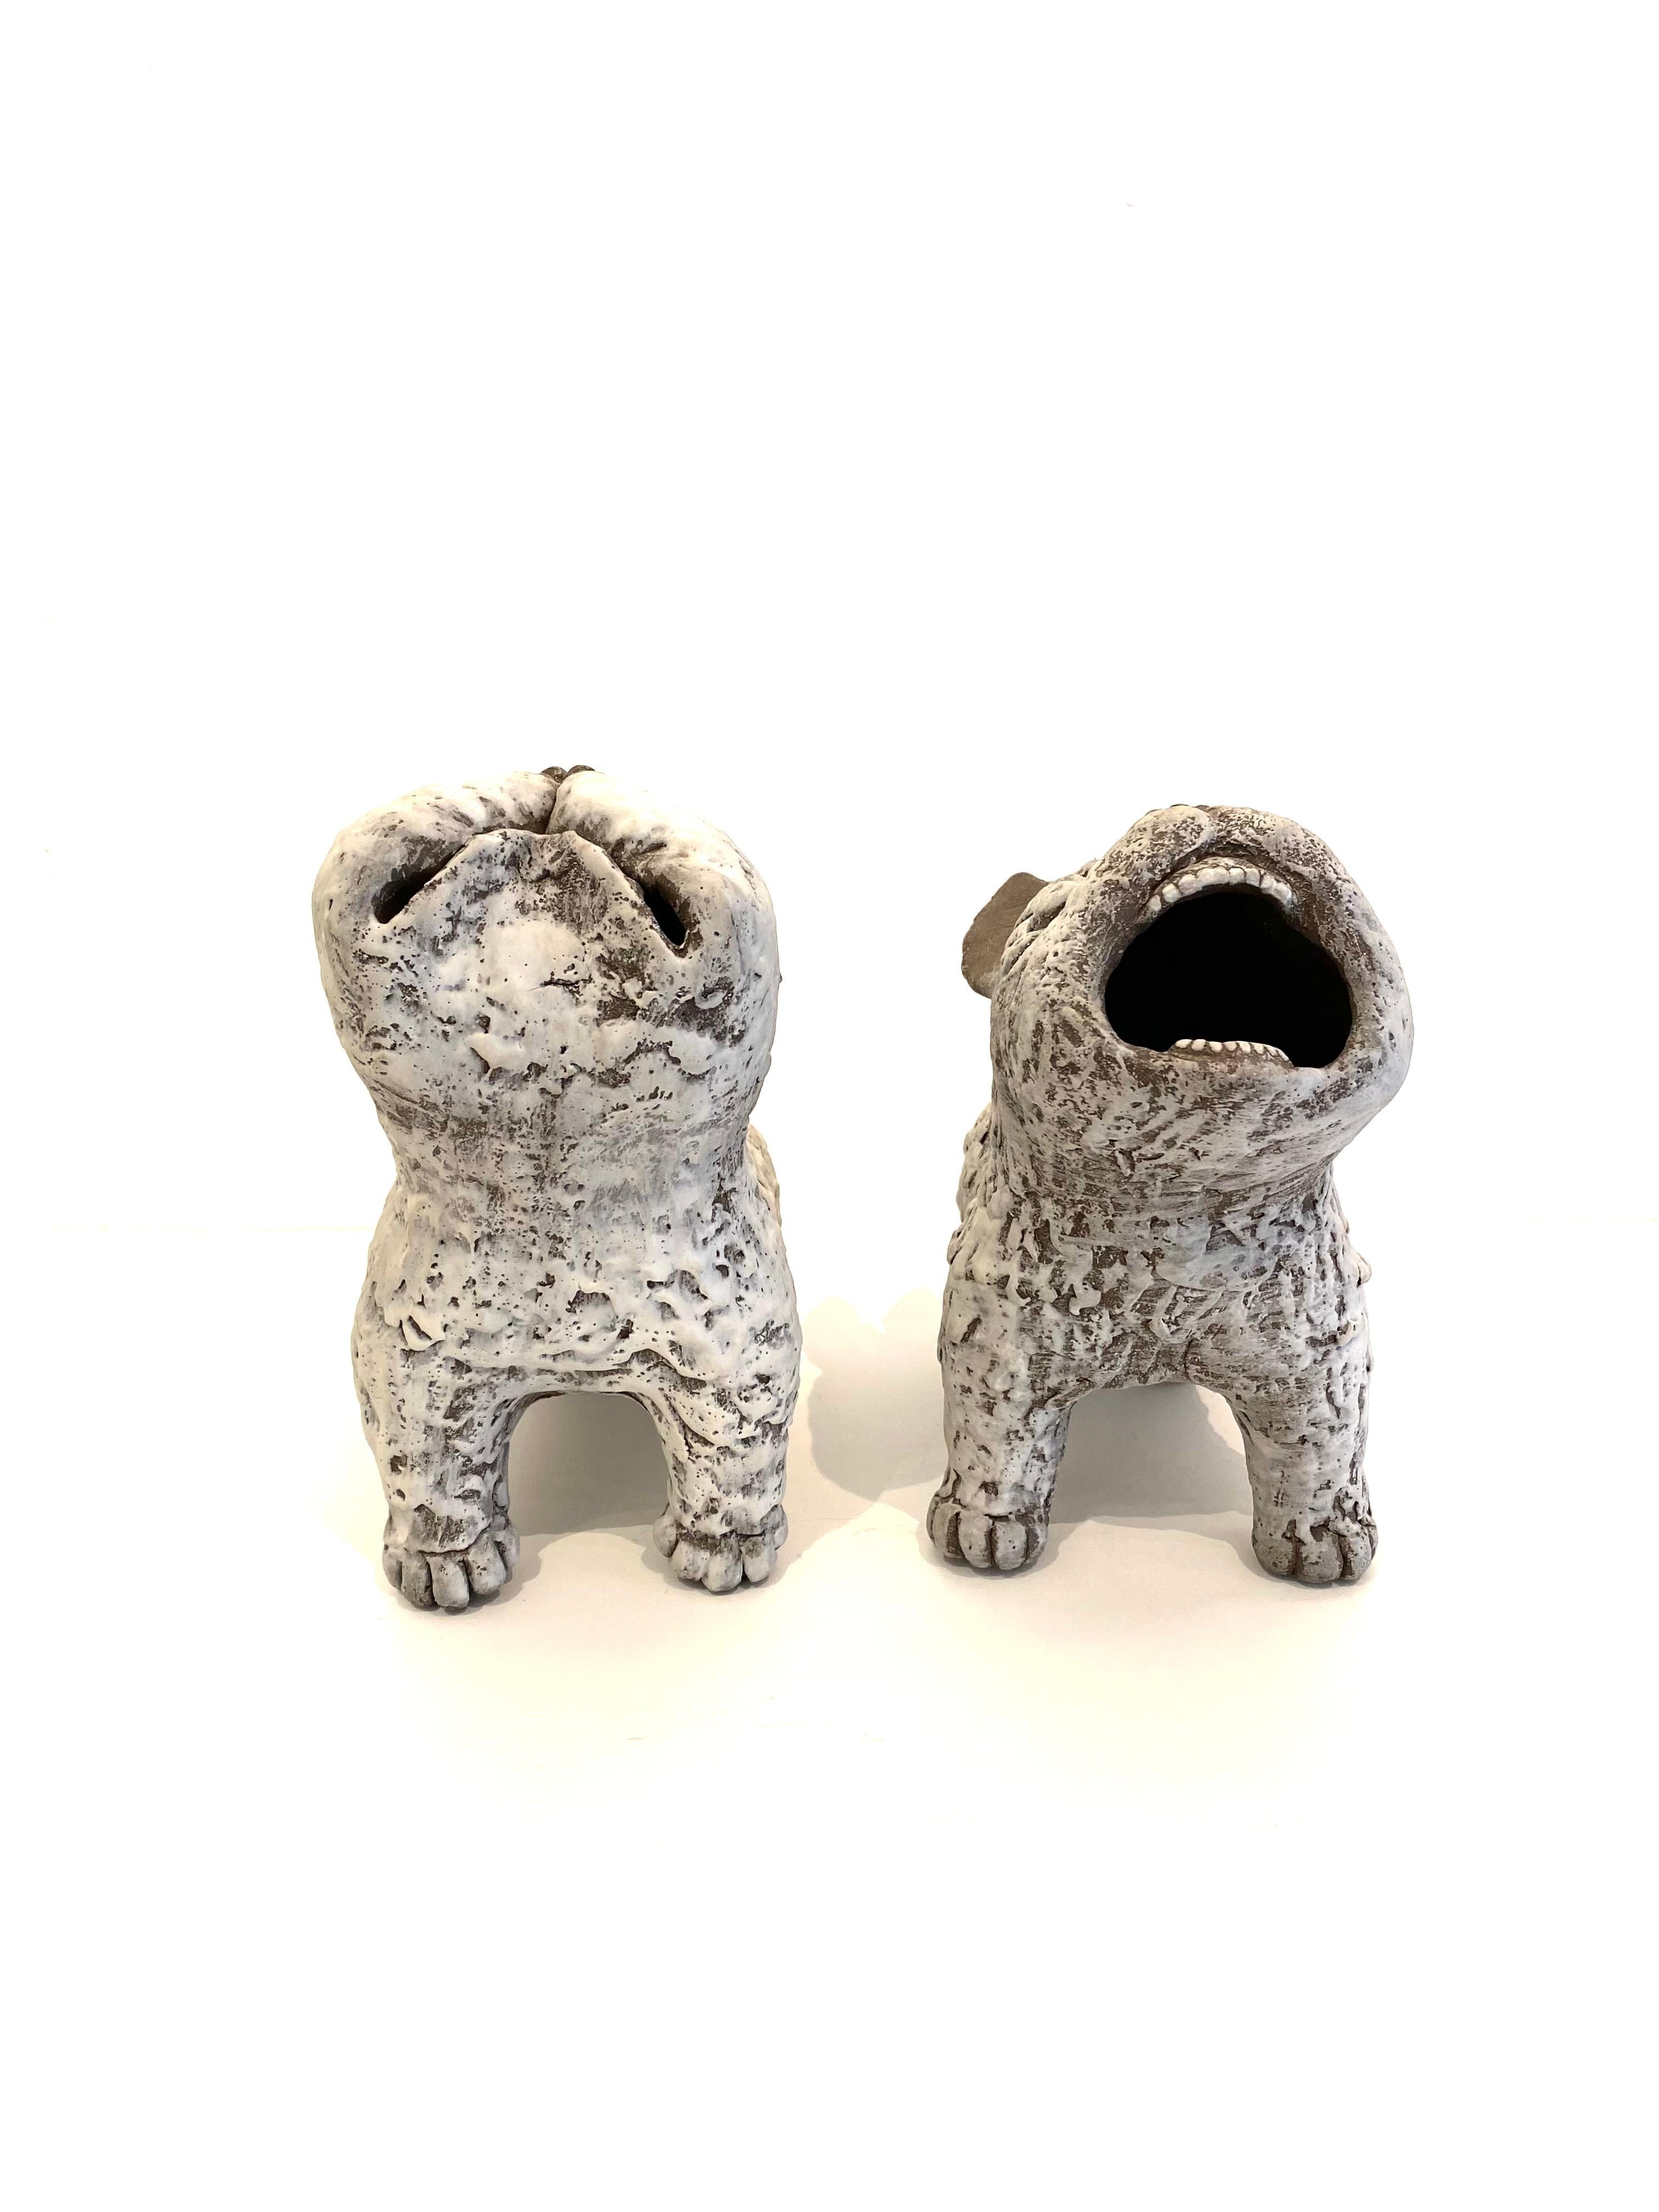 Ceramic Foo Dogs: 'Guardian Dogs' - Sculpture by Kenjiro Kitade